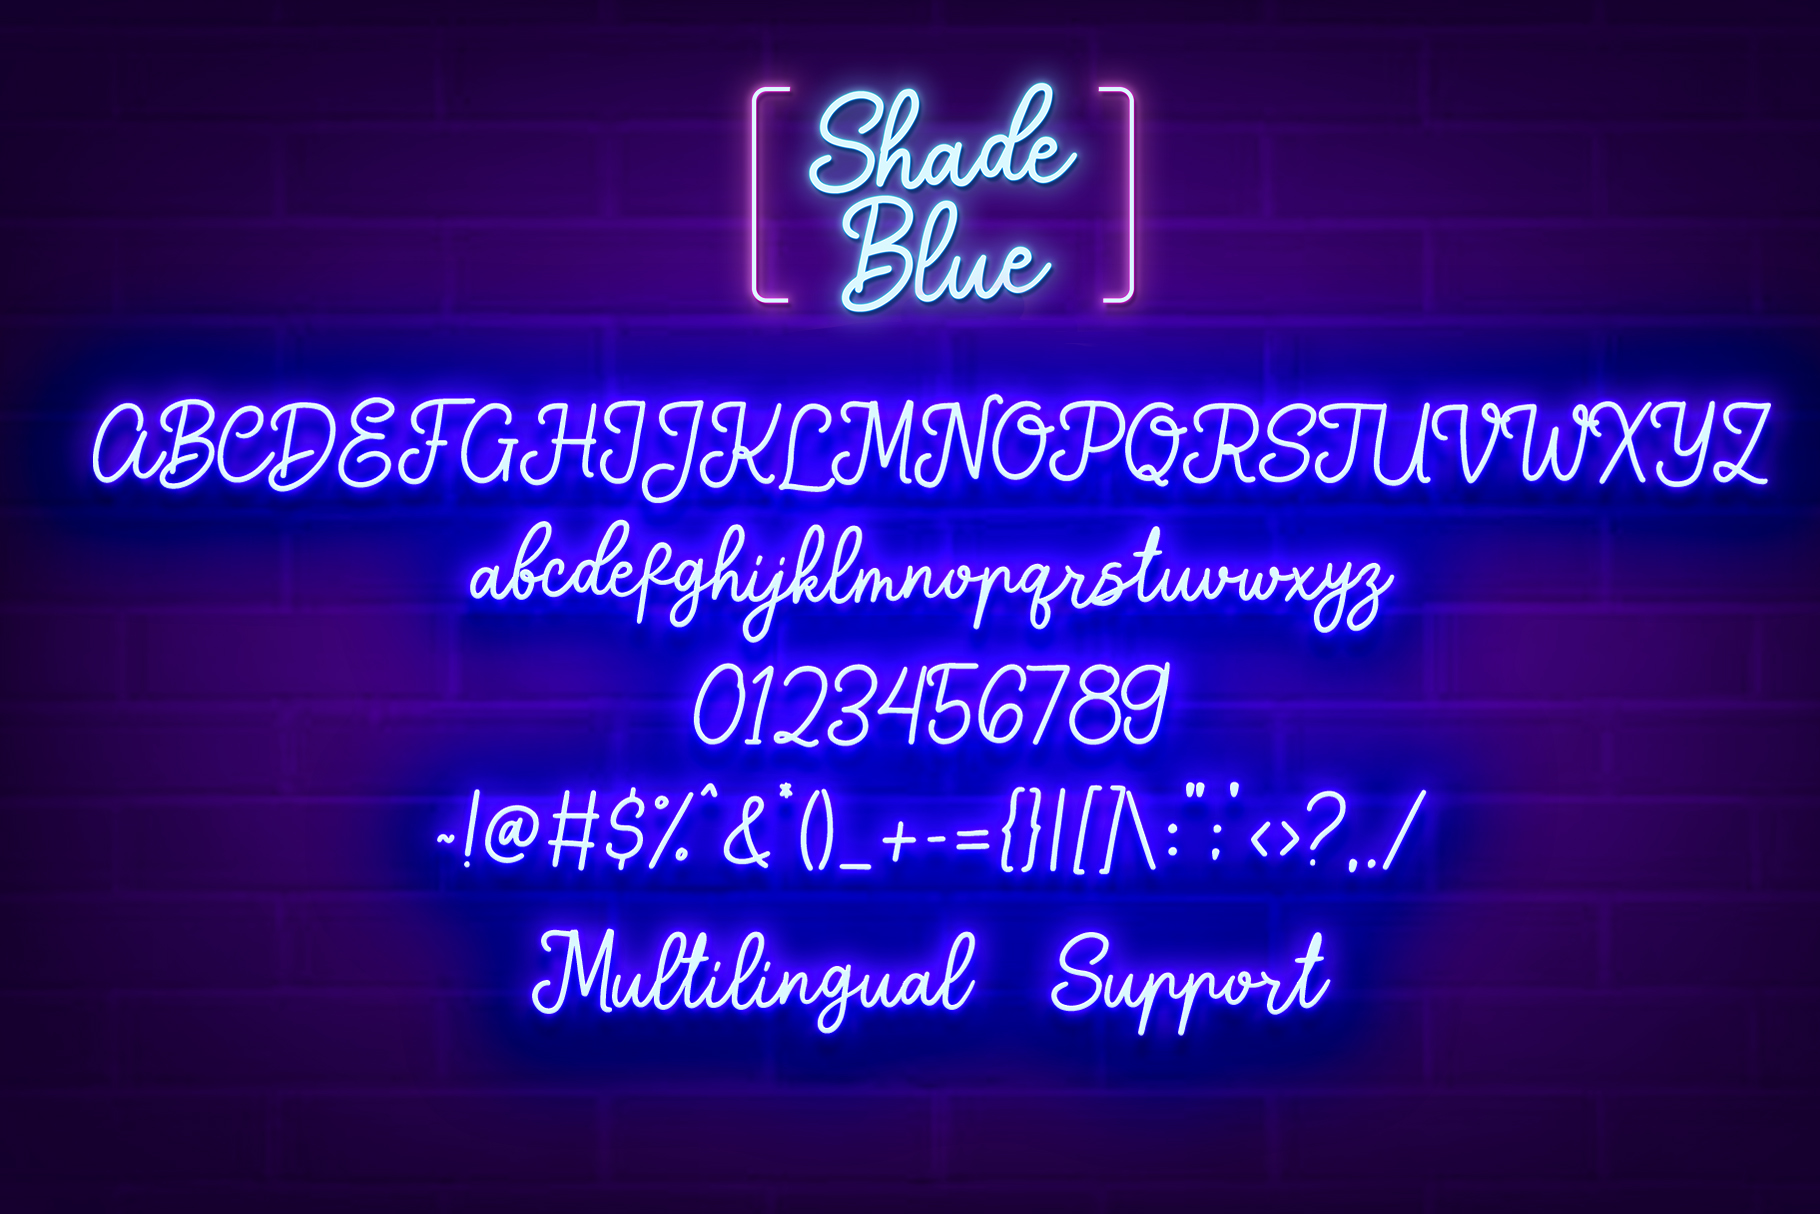 Shade Blue